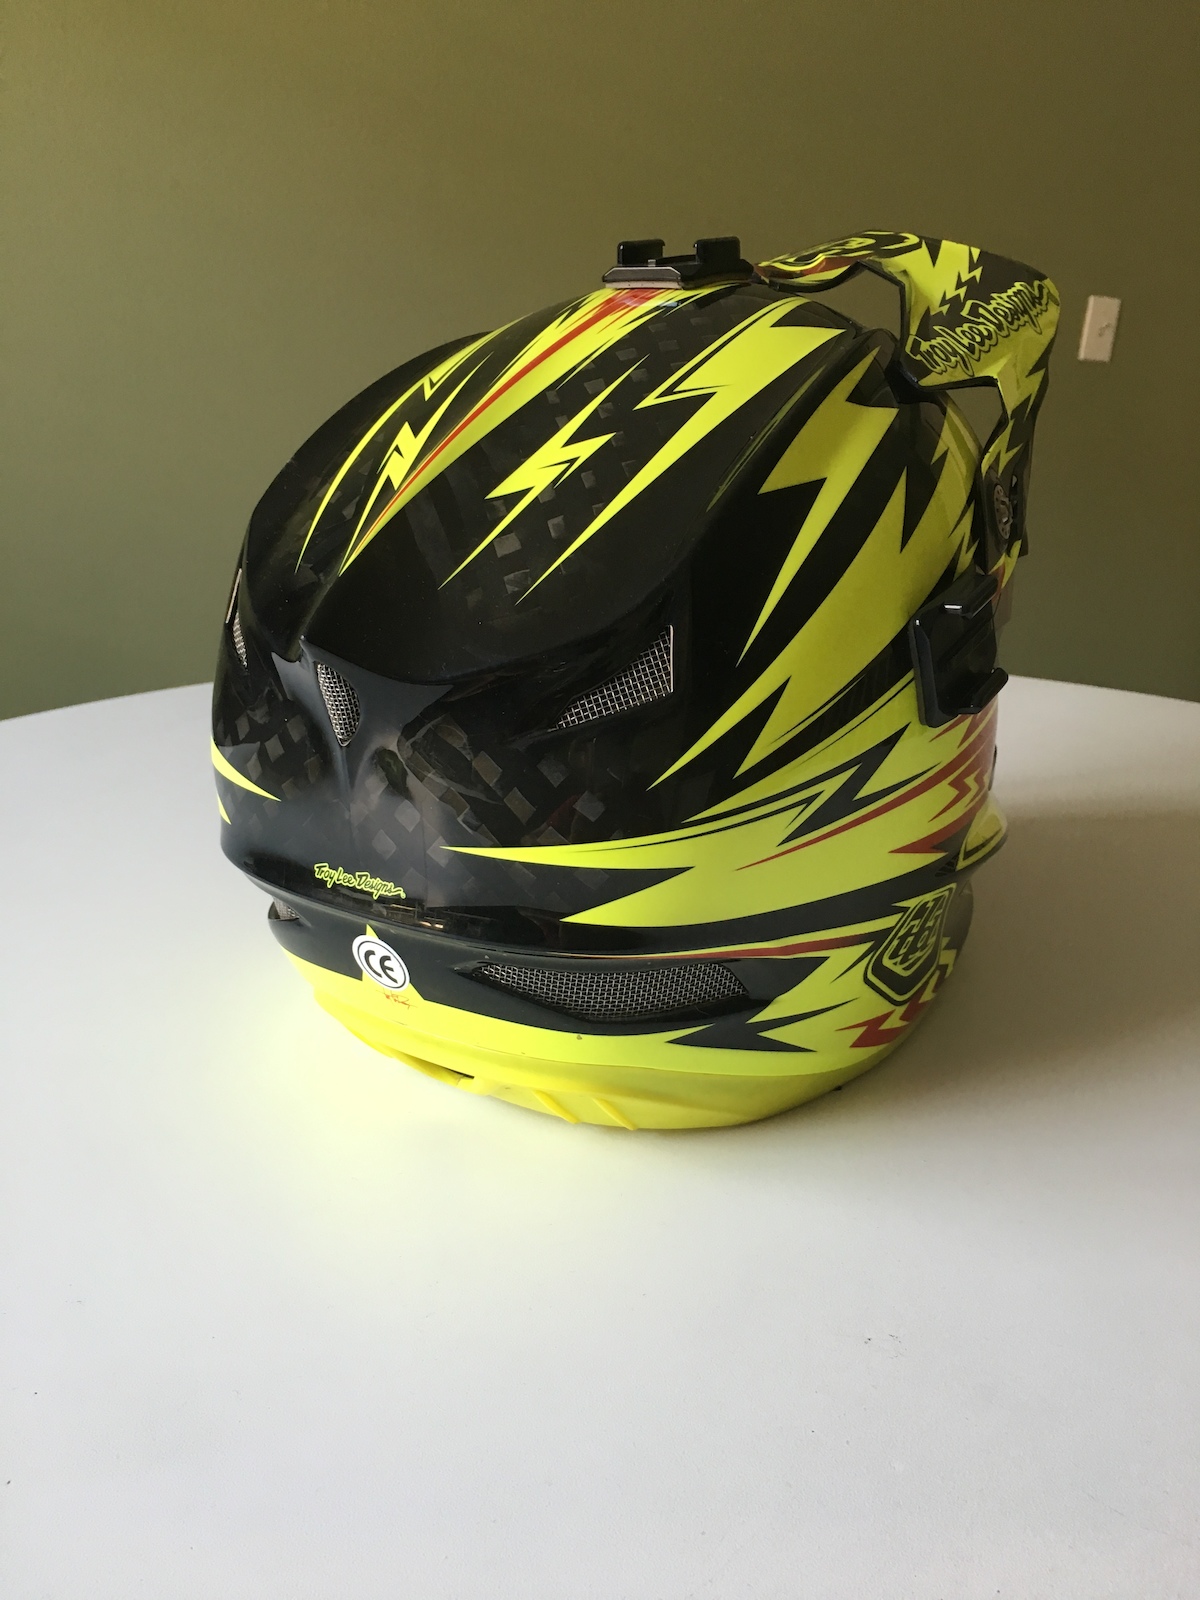 2013 Troy Lee Designs D3 Thunder Helmet